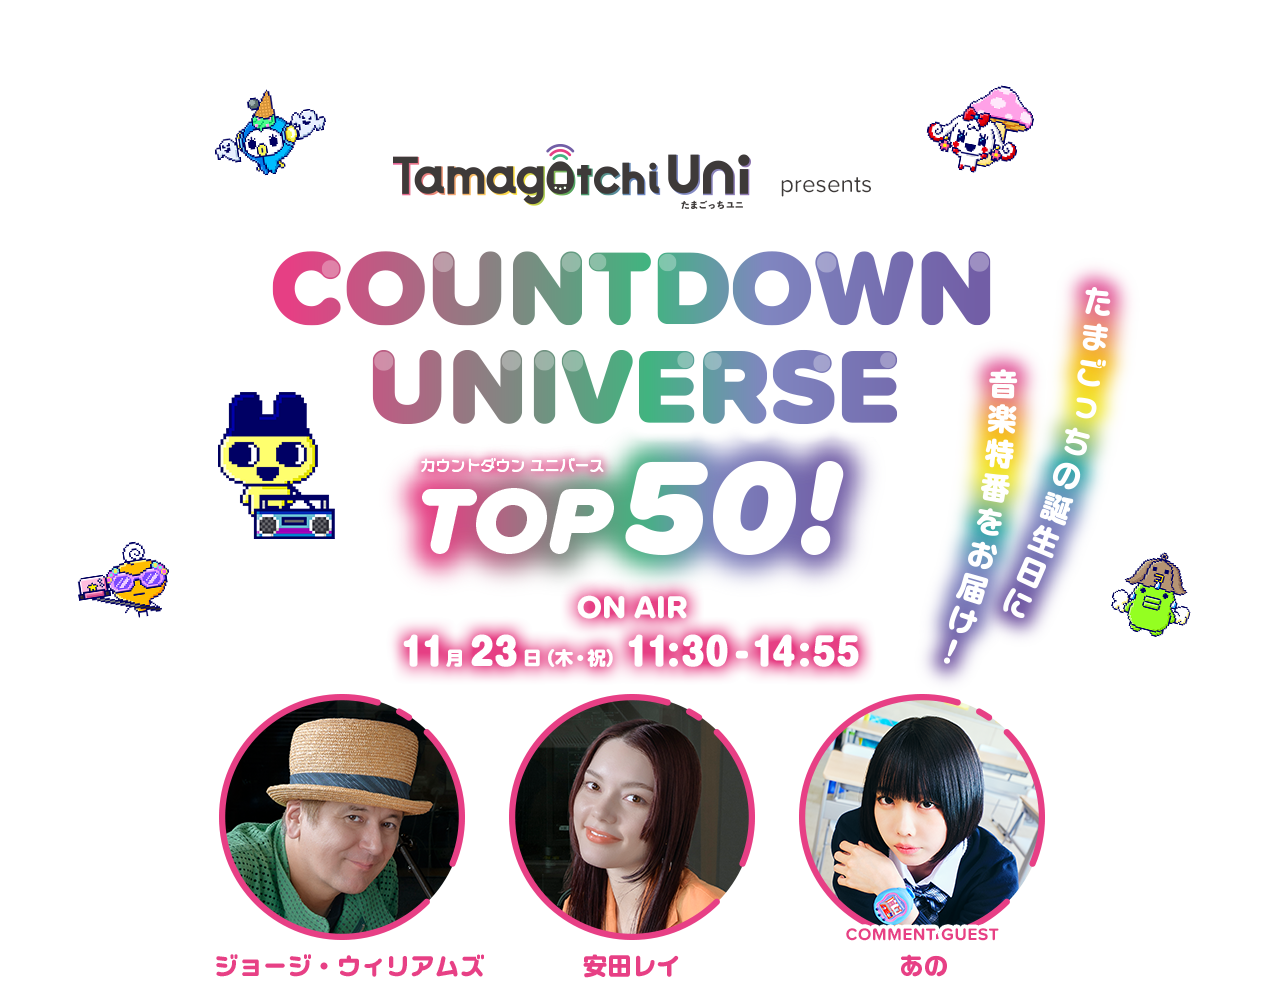 TOKYO FMホリデースペシャル Tamagotchi Uni presents COUNTDOWN UNIVERSE TOP50！ ON AIR （木・祝）11:30-14:55 ジョージ・ウィリアムズ 安田レイ COMMENT GUEST あの